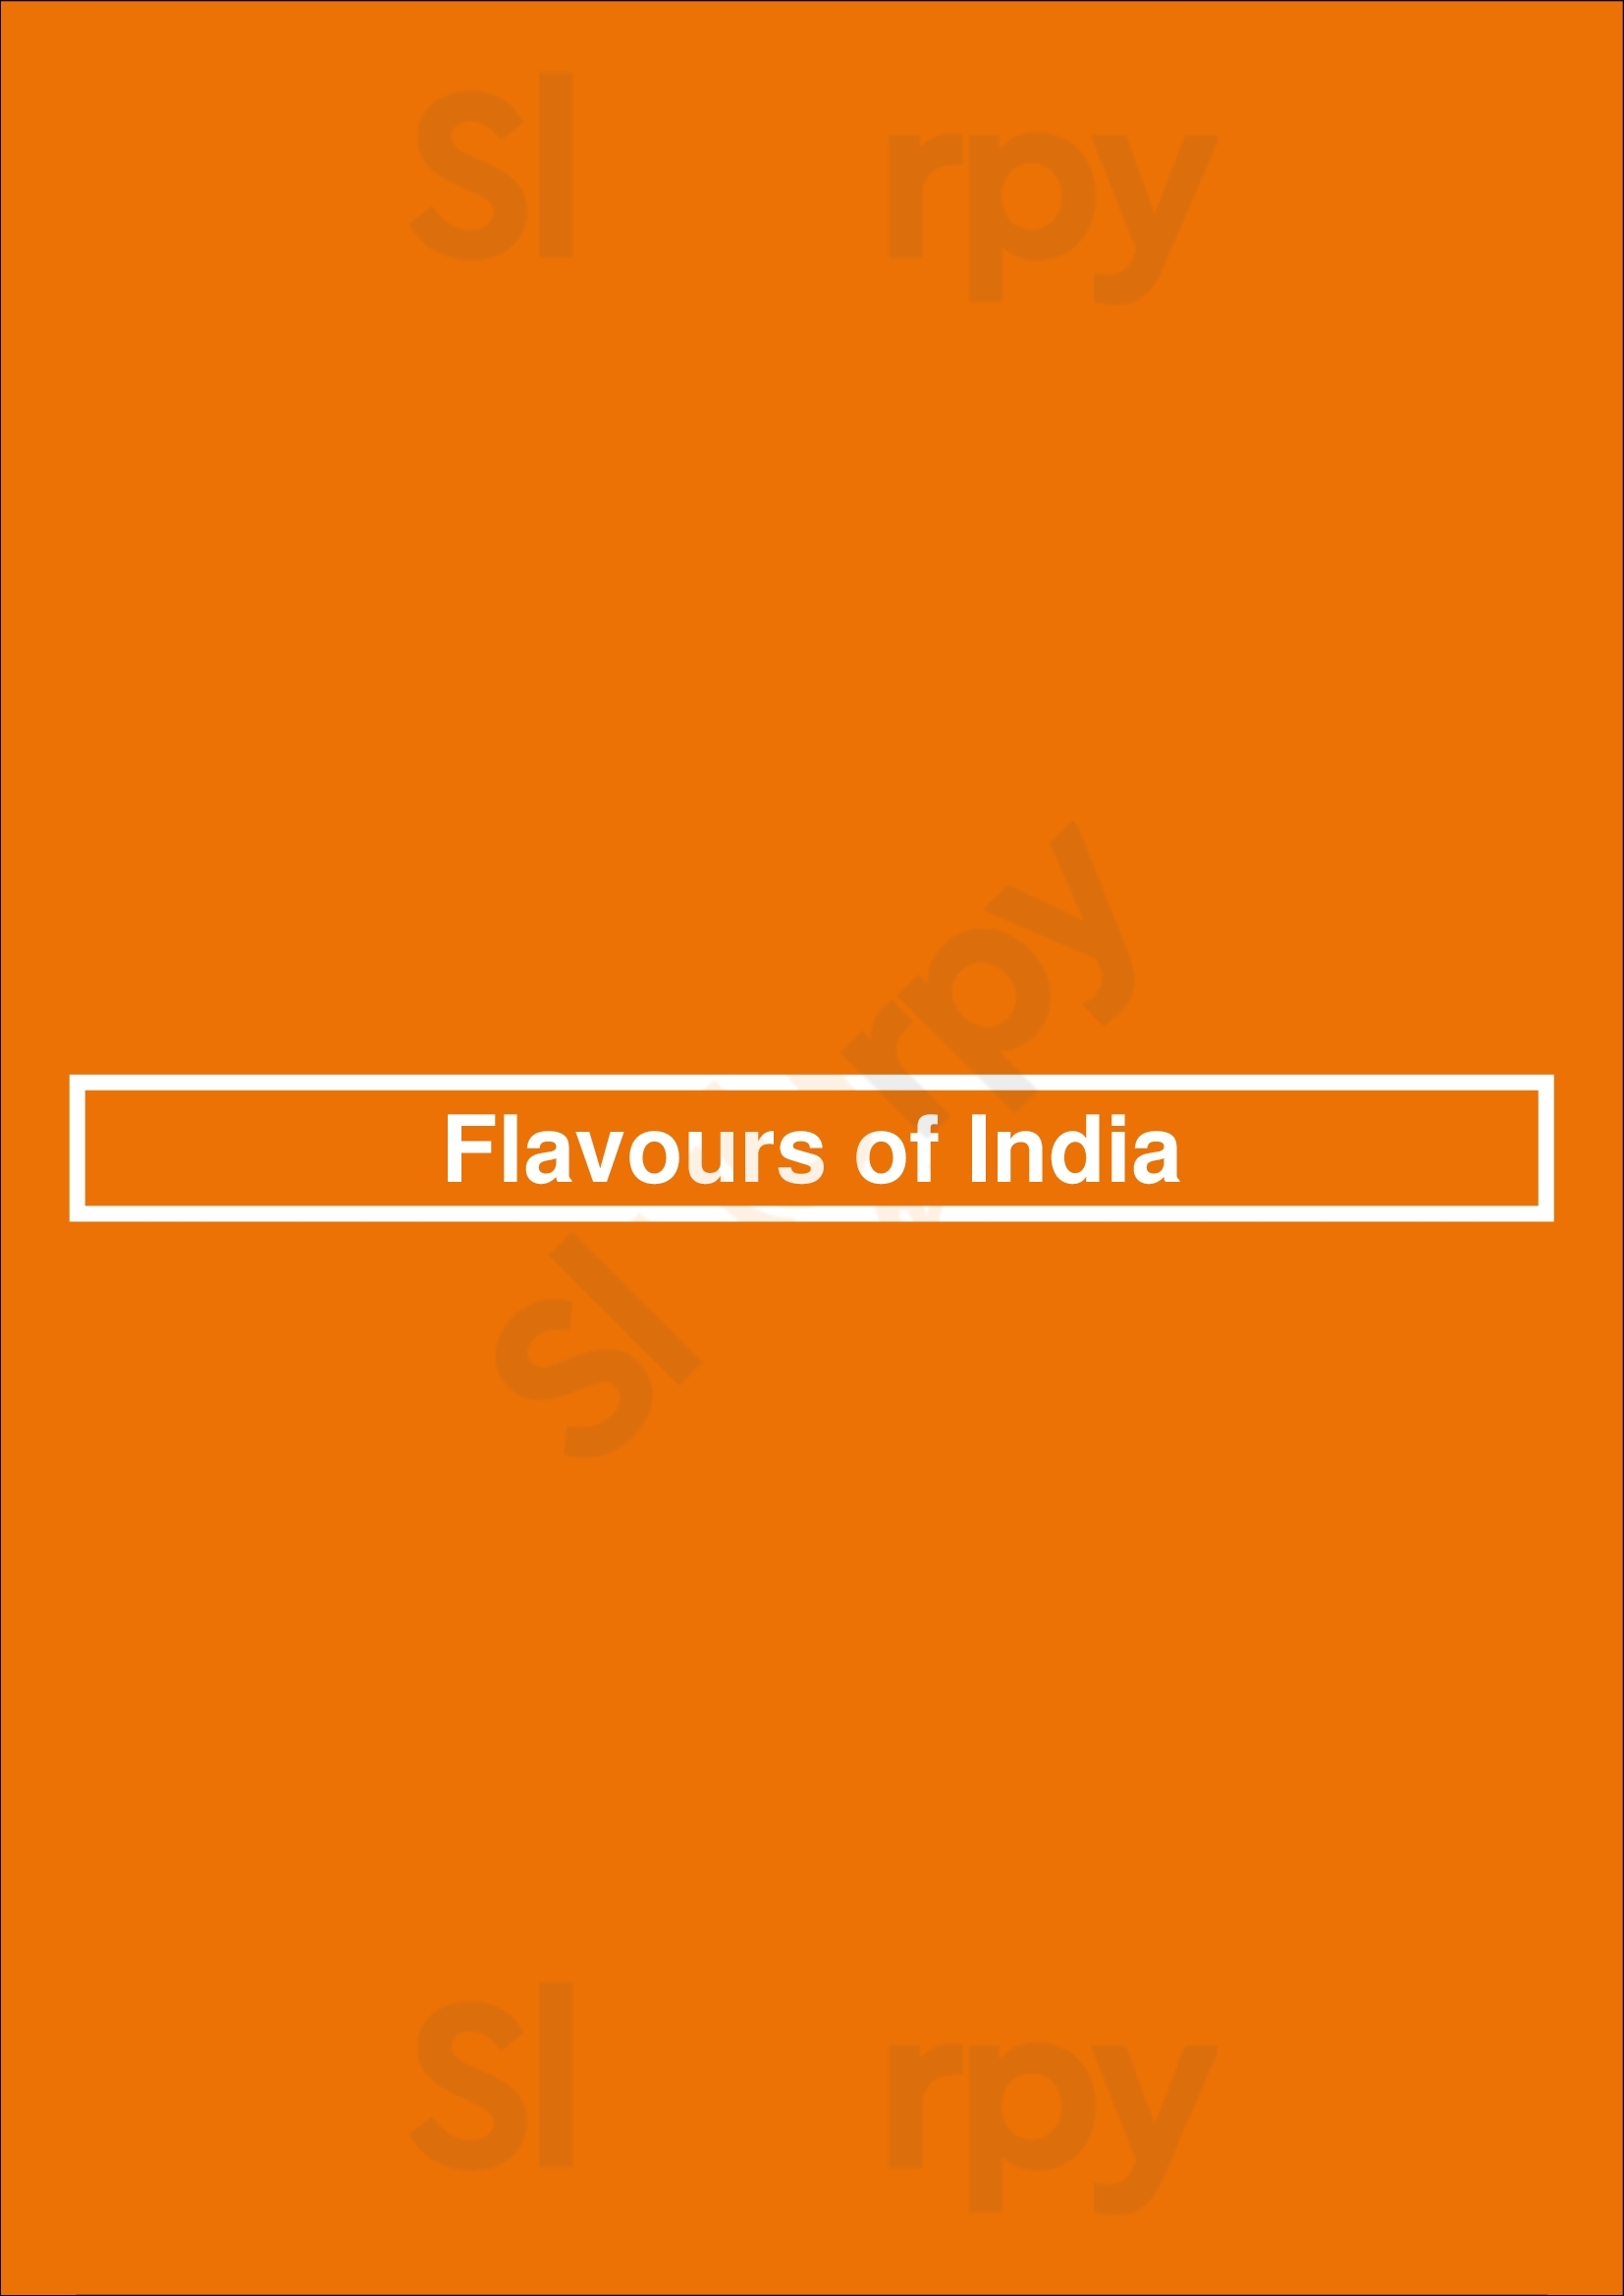 Flavours Of India Kingston Menu - 1